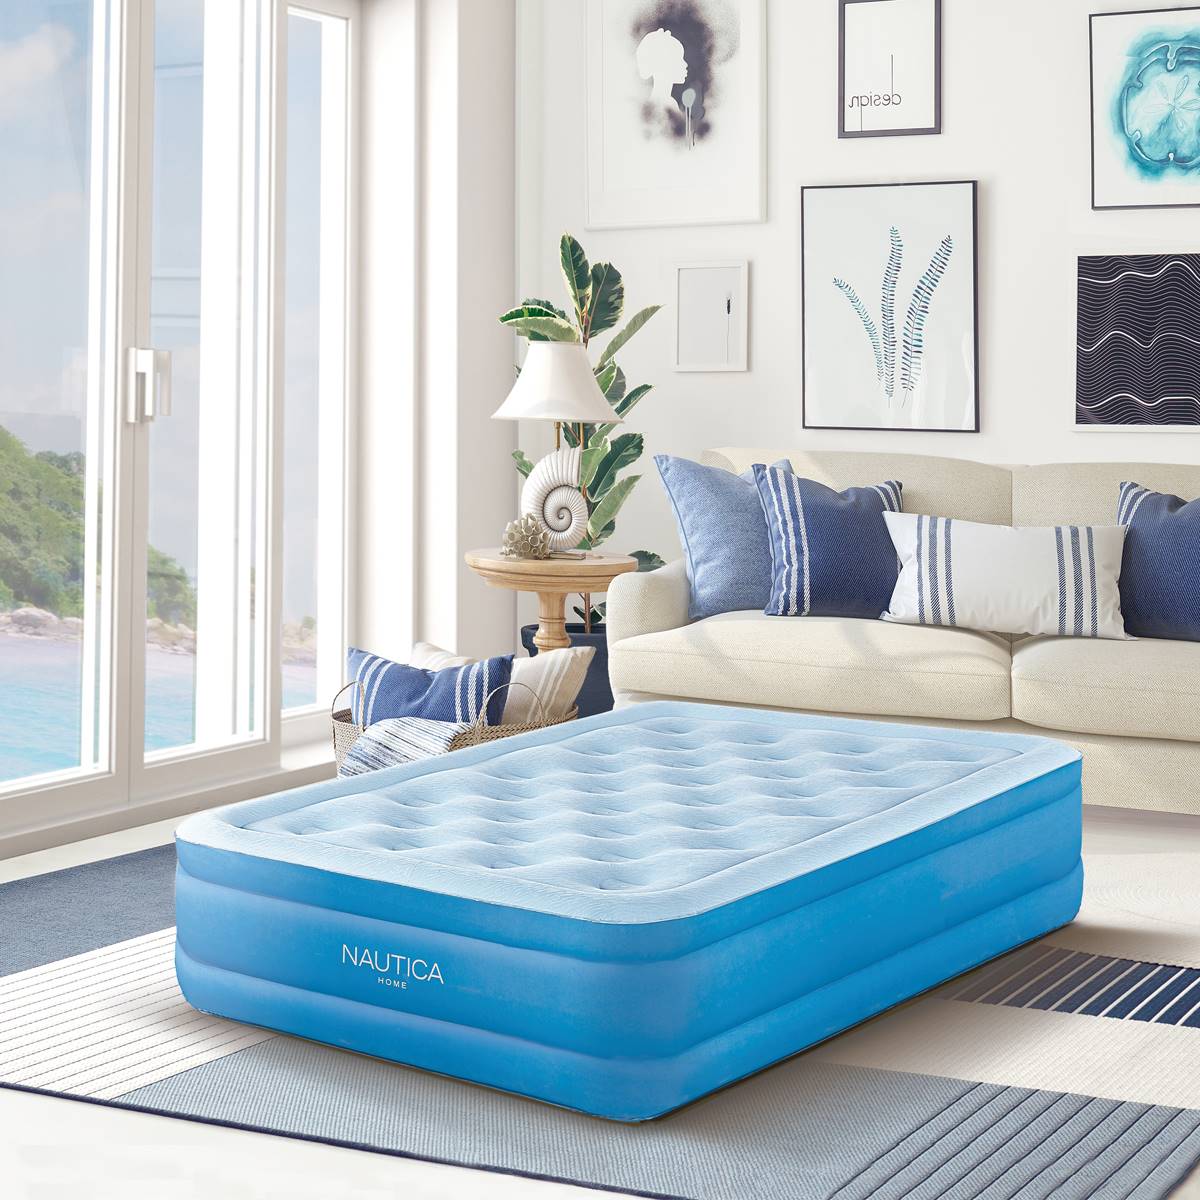 Nautica Home Cool Comfort 16in. Full Pillowtop Air Mattress